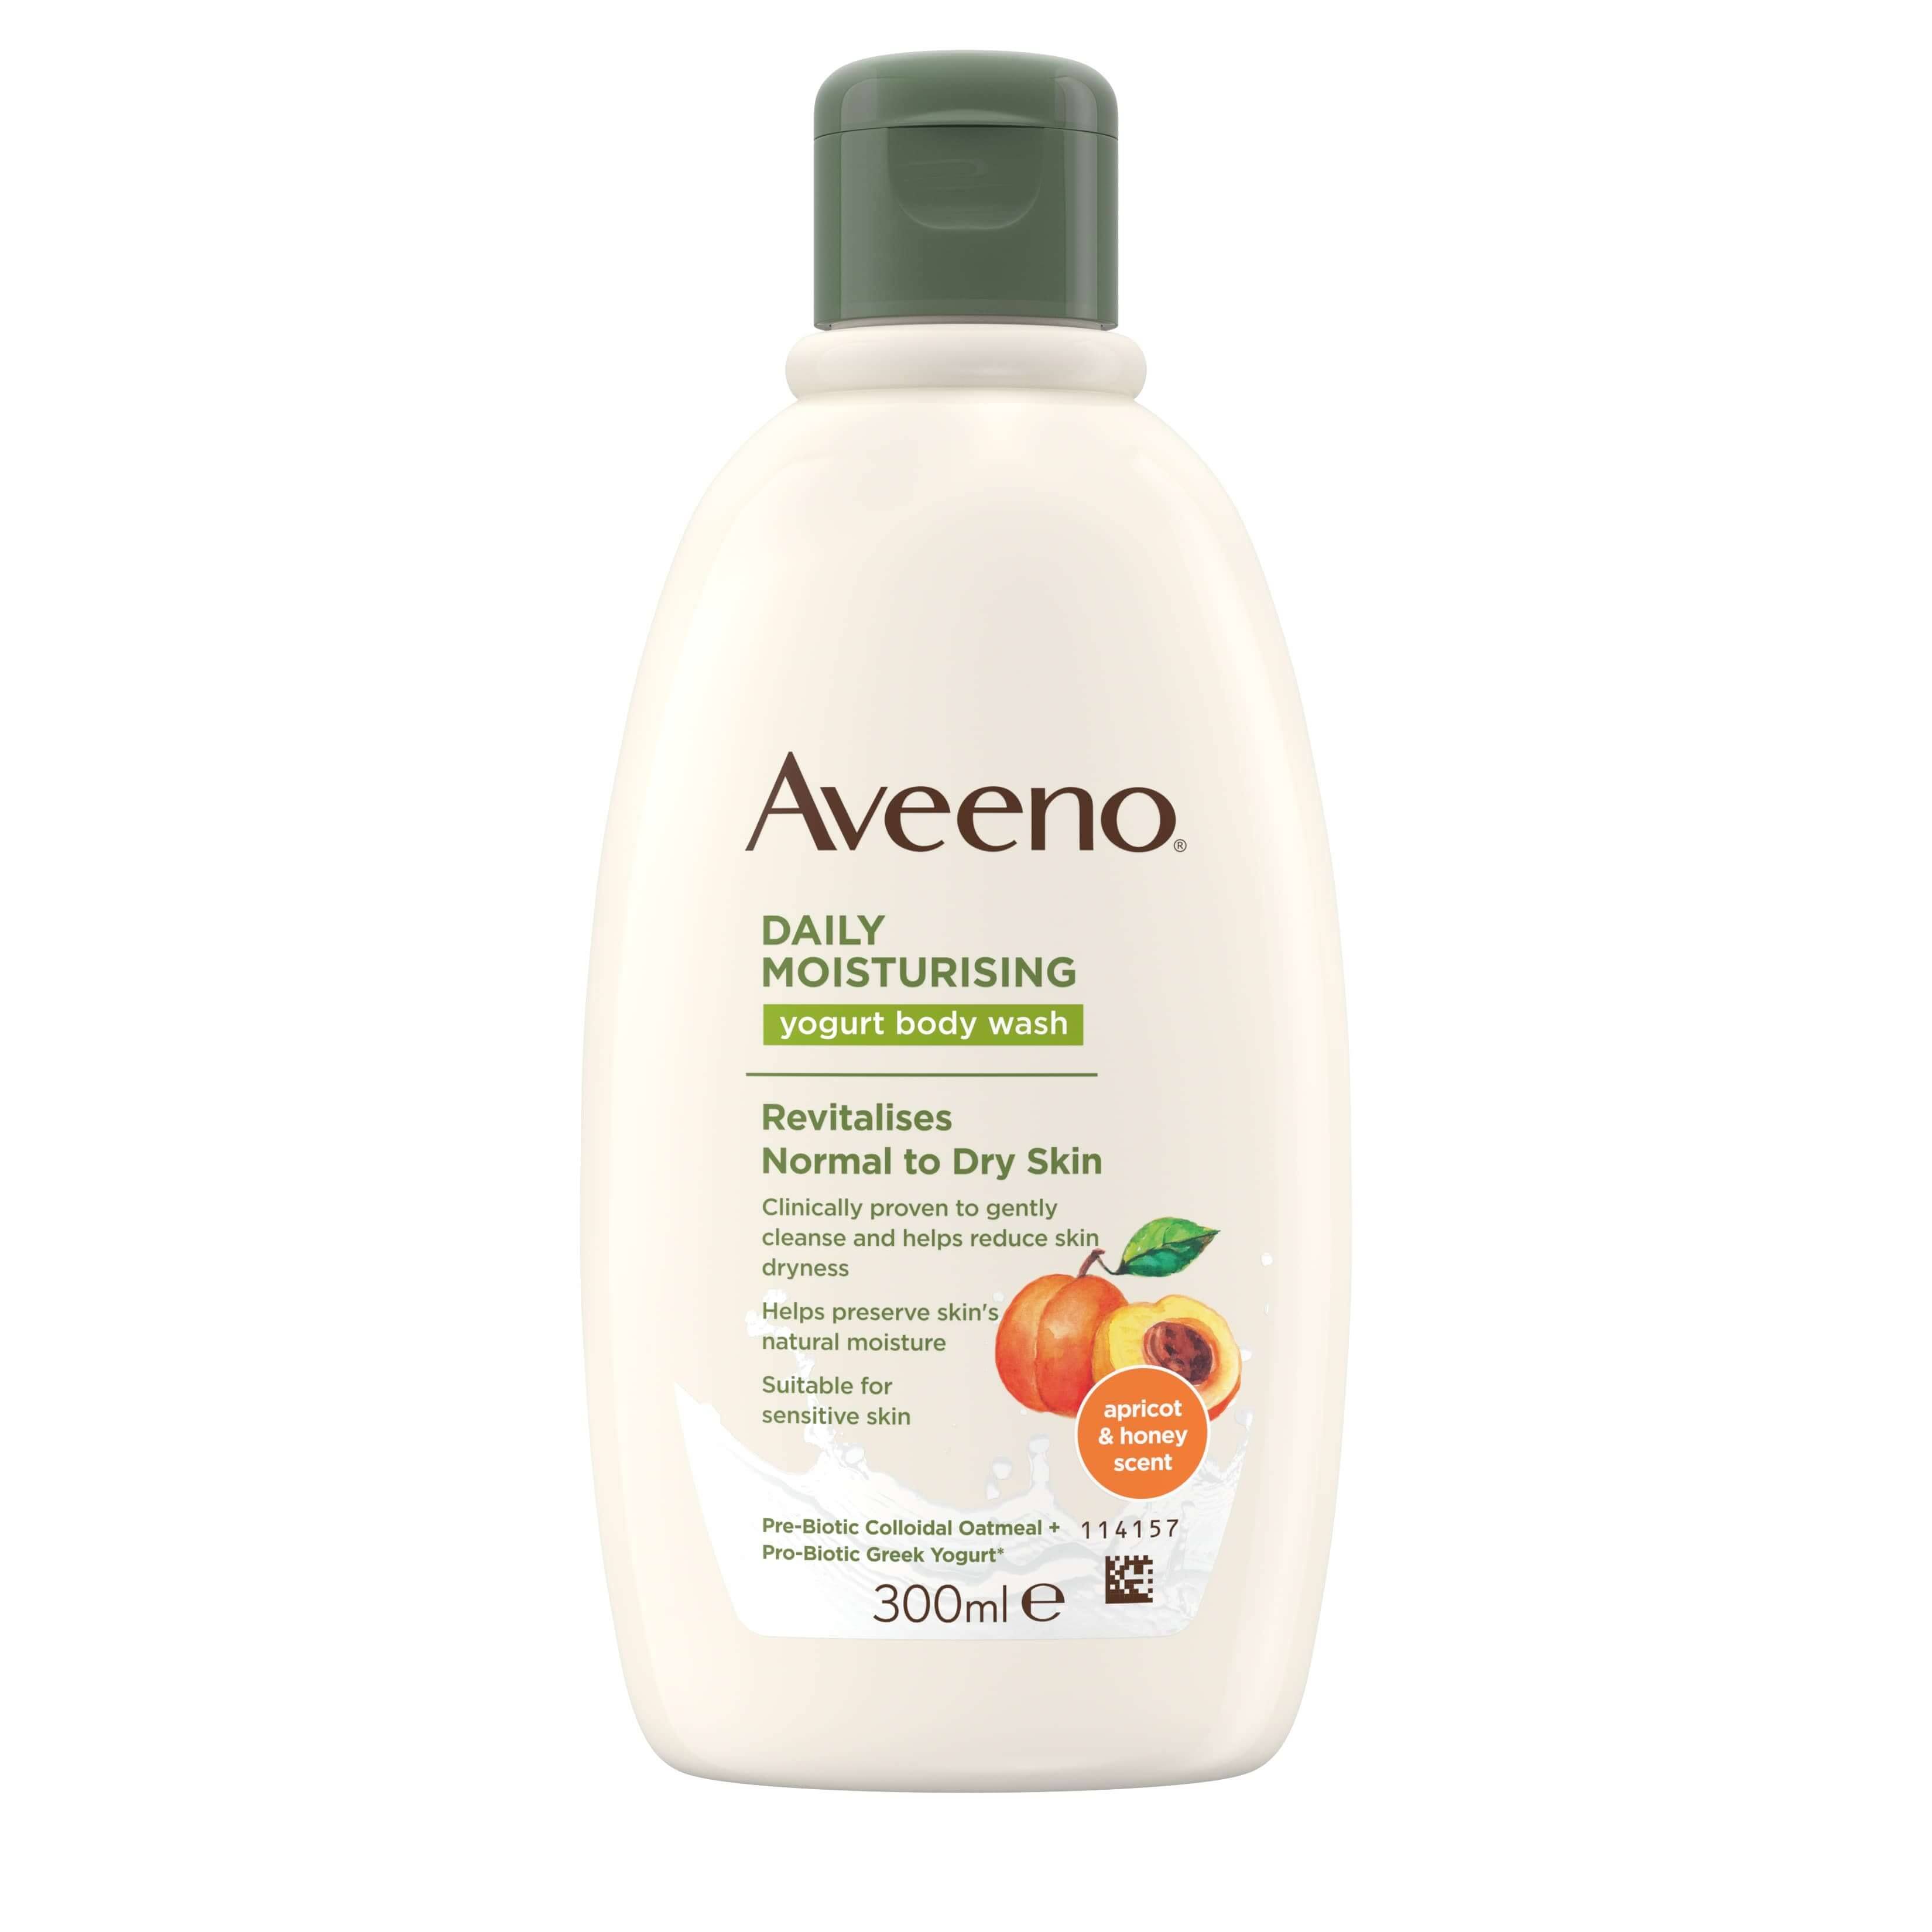 Aveeno Daily Moisturizing Body Wash - 300ml, Apricot and Honey